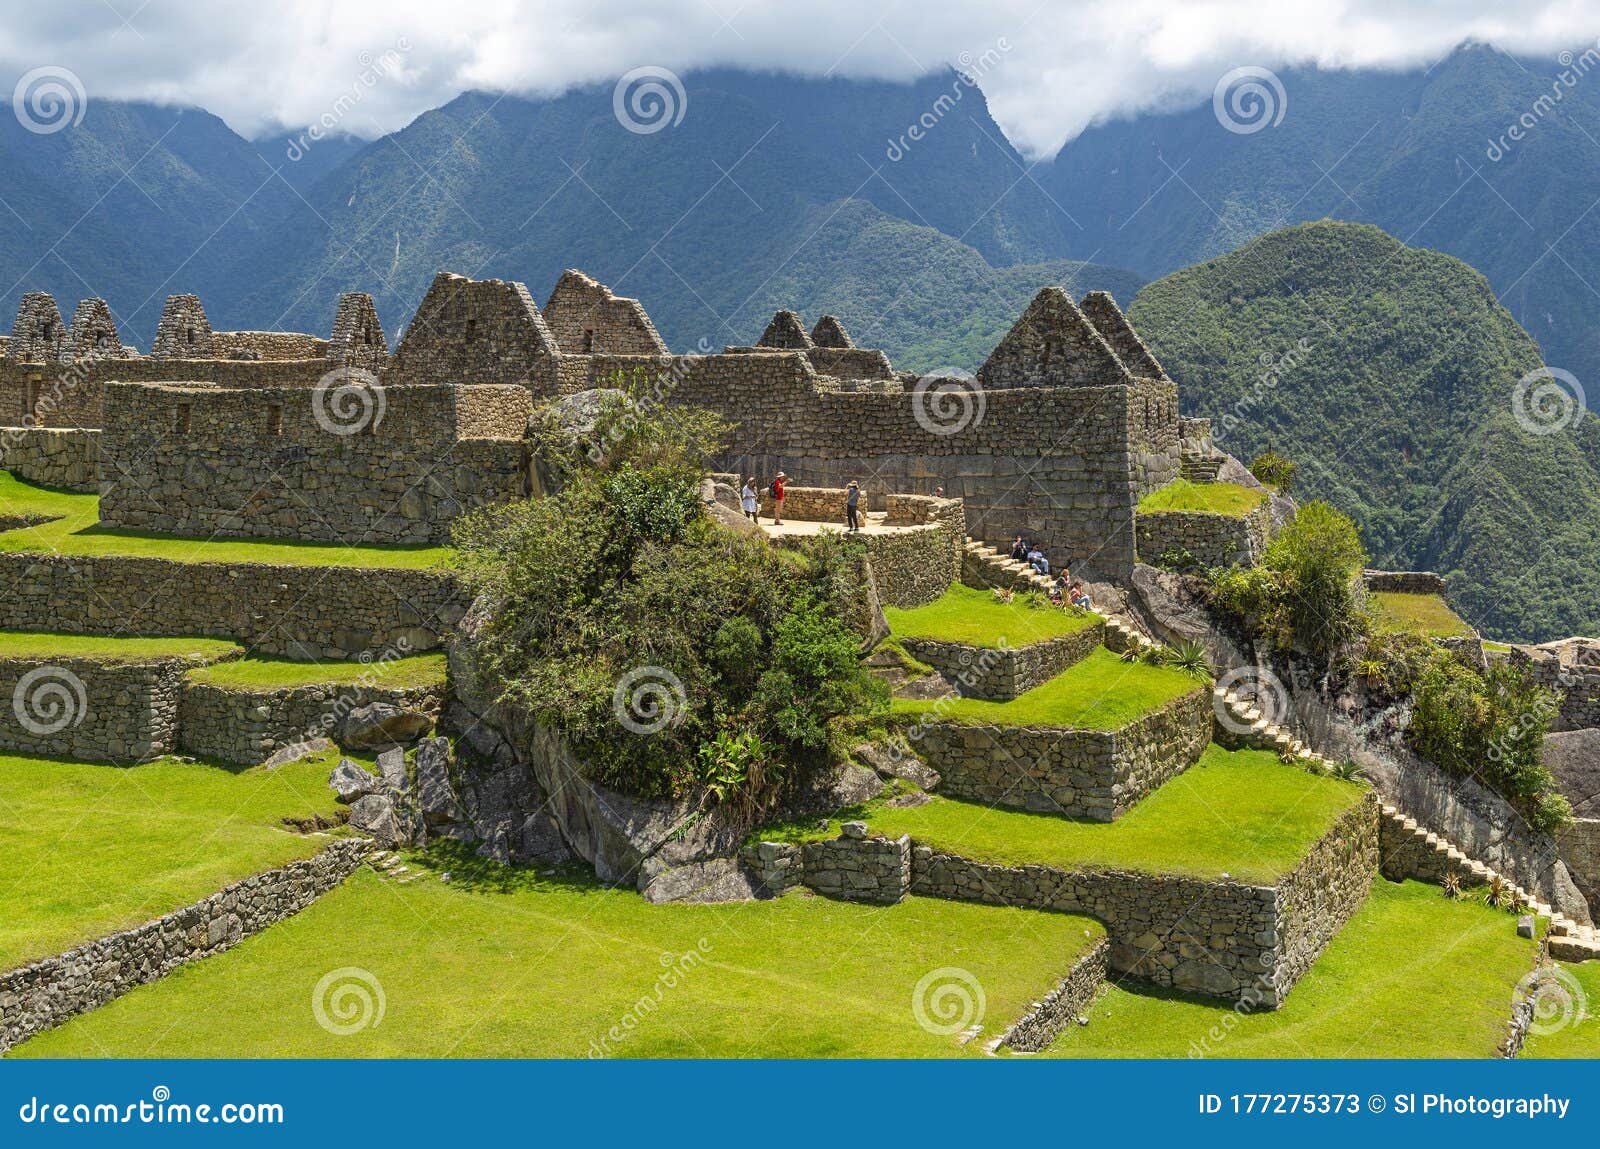 New Airport Threatens Historical Ruins of Machu Picchu 